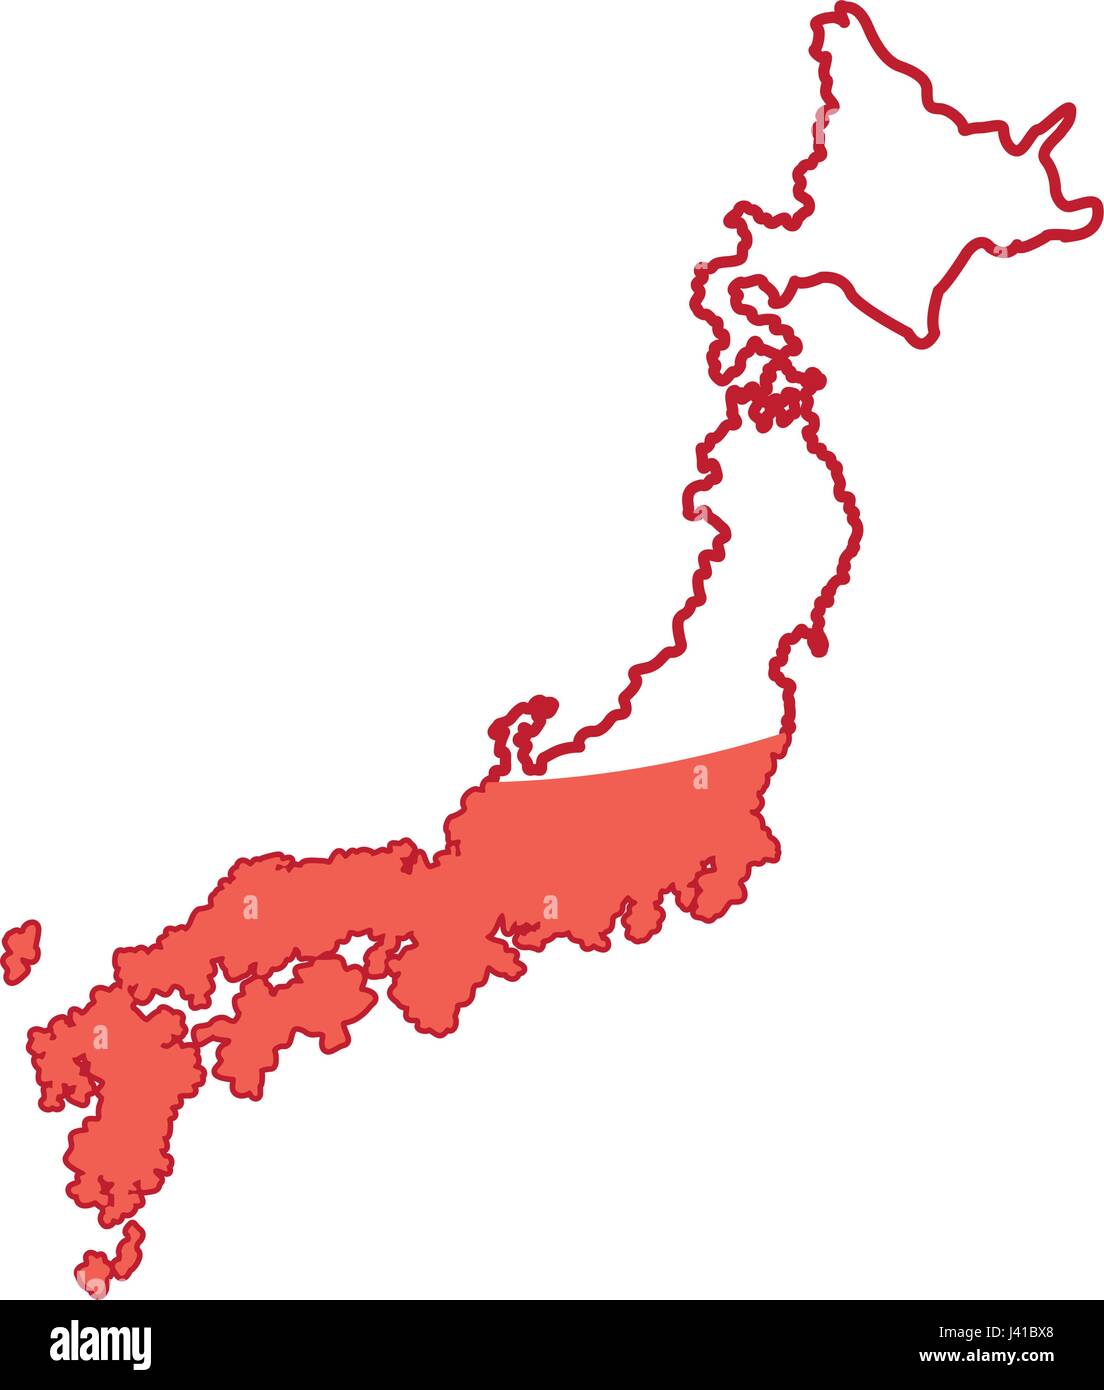 japanese map landmark country location Stock Vector